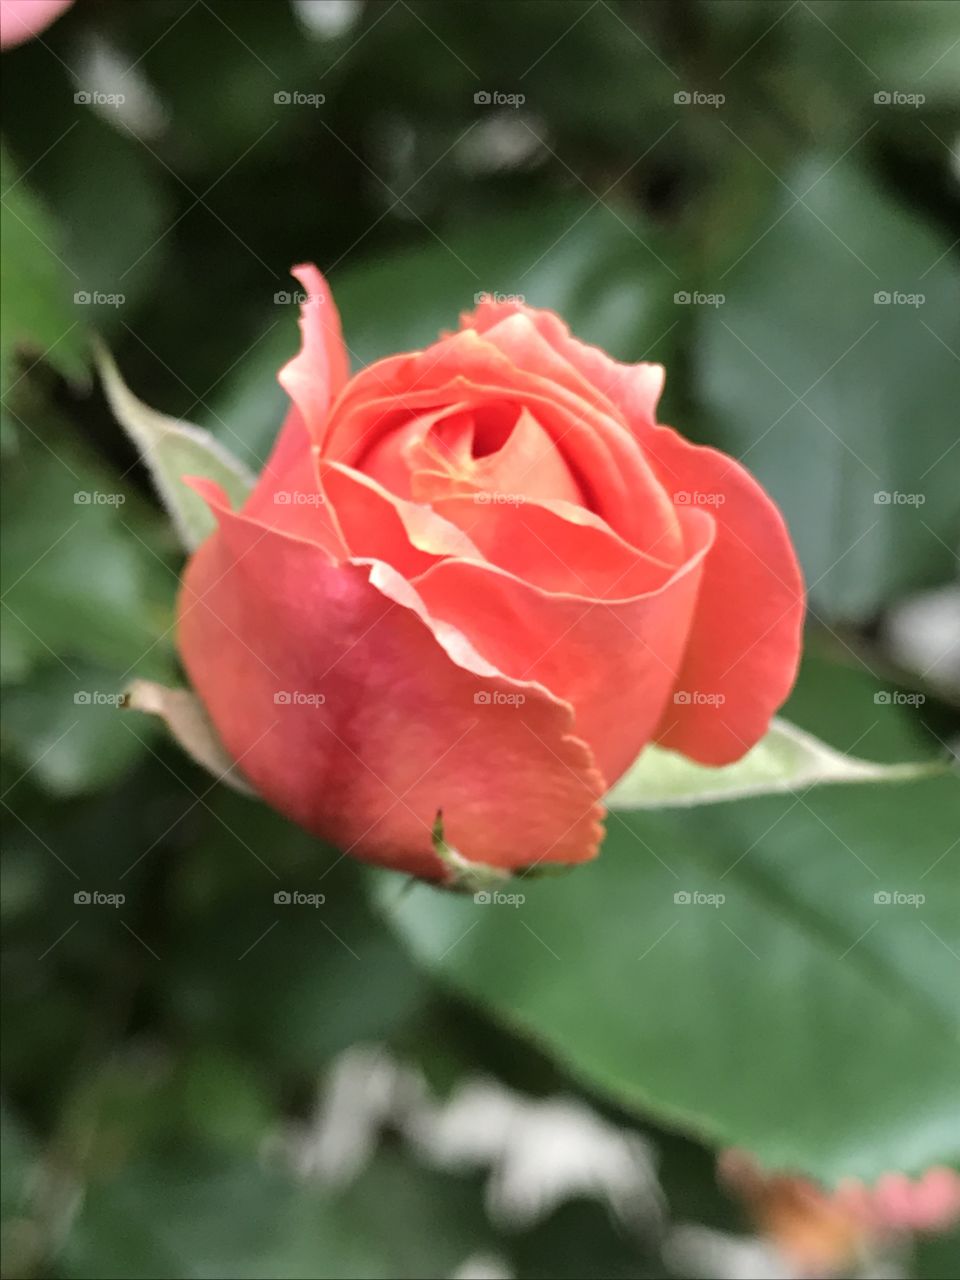 Peachy orange rose bud